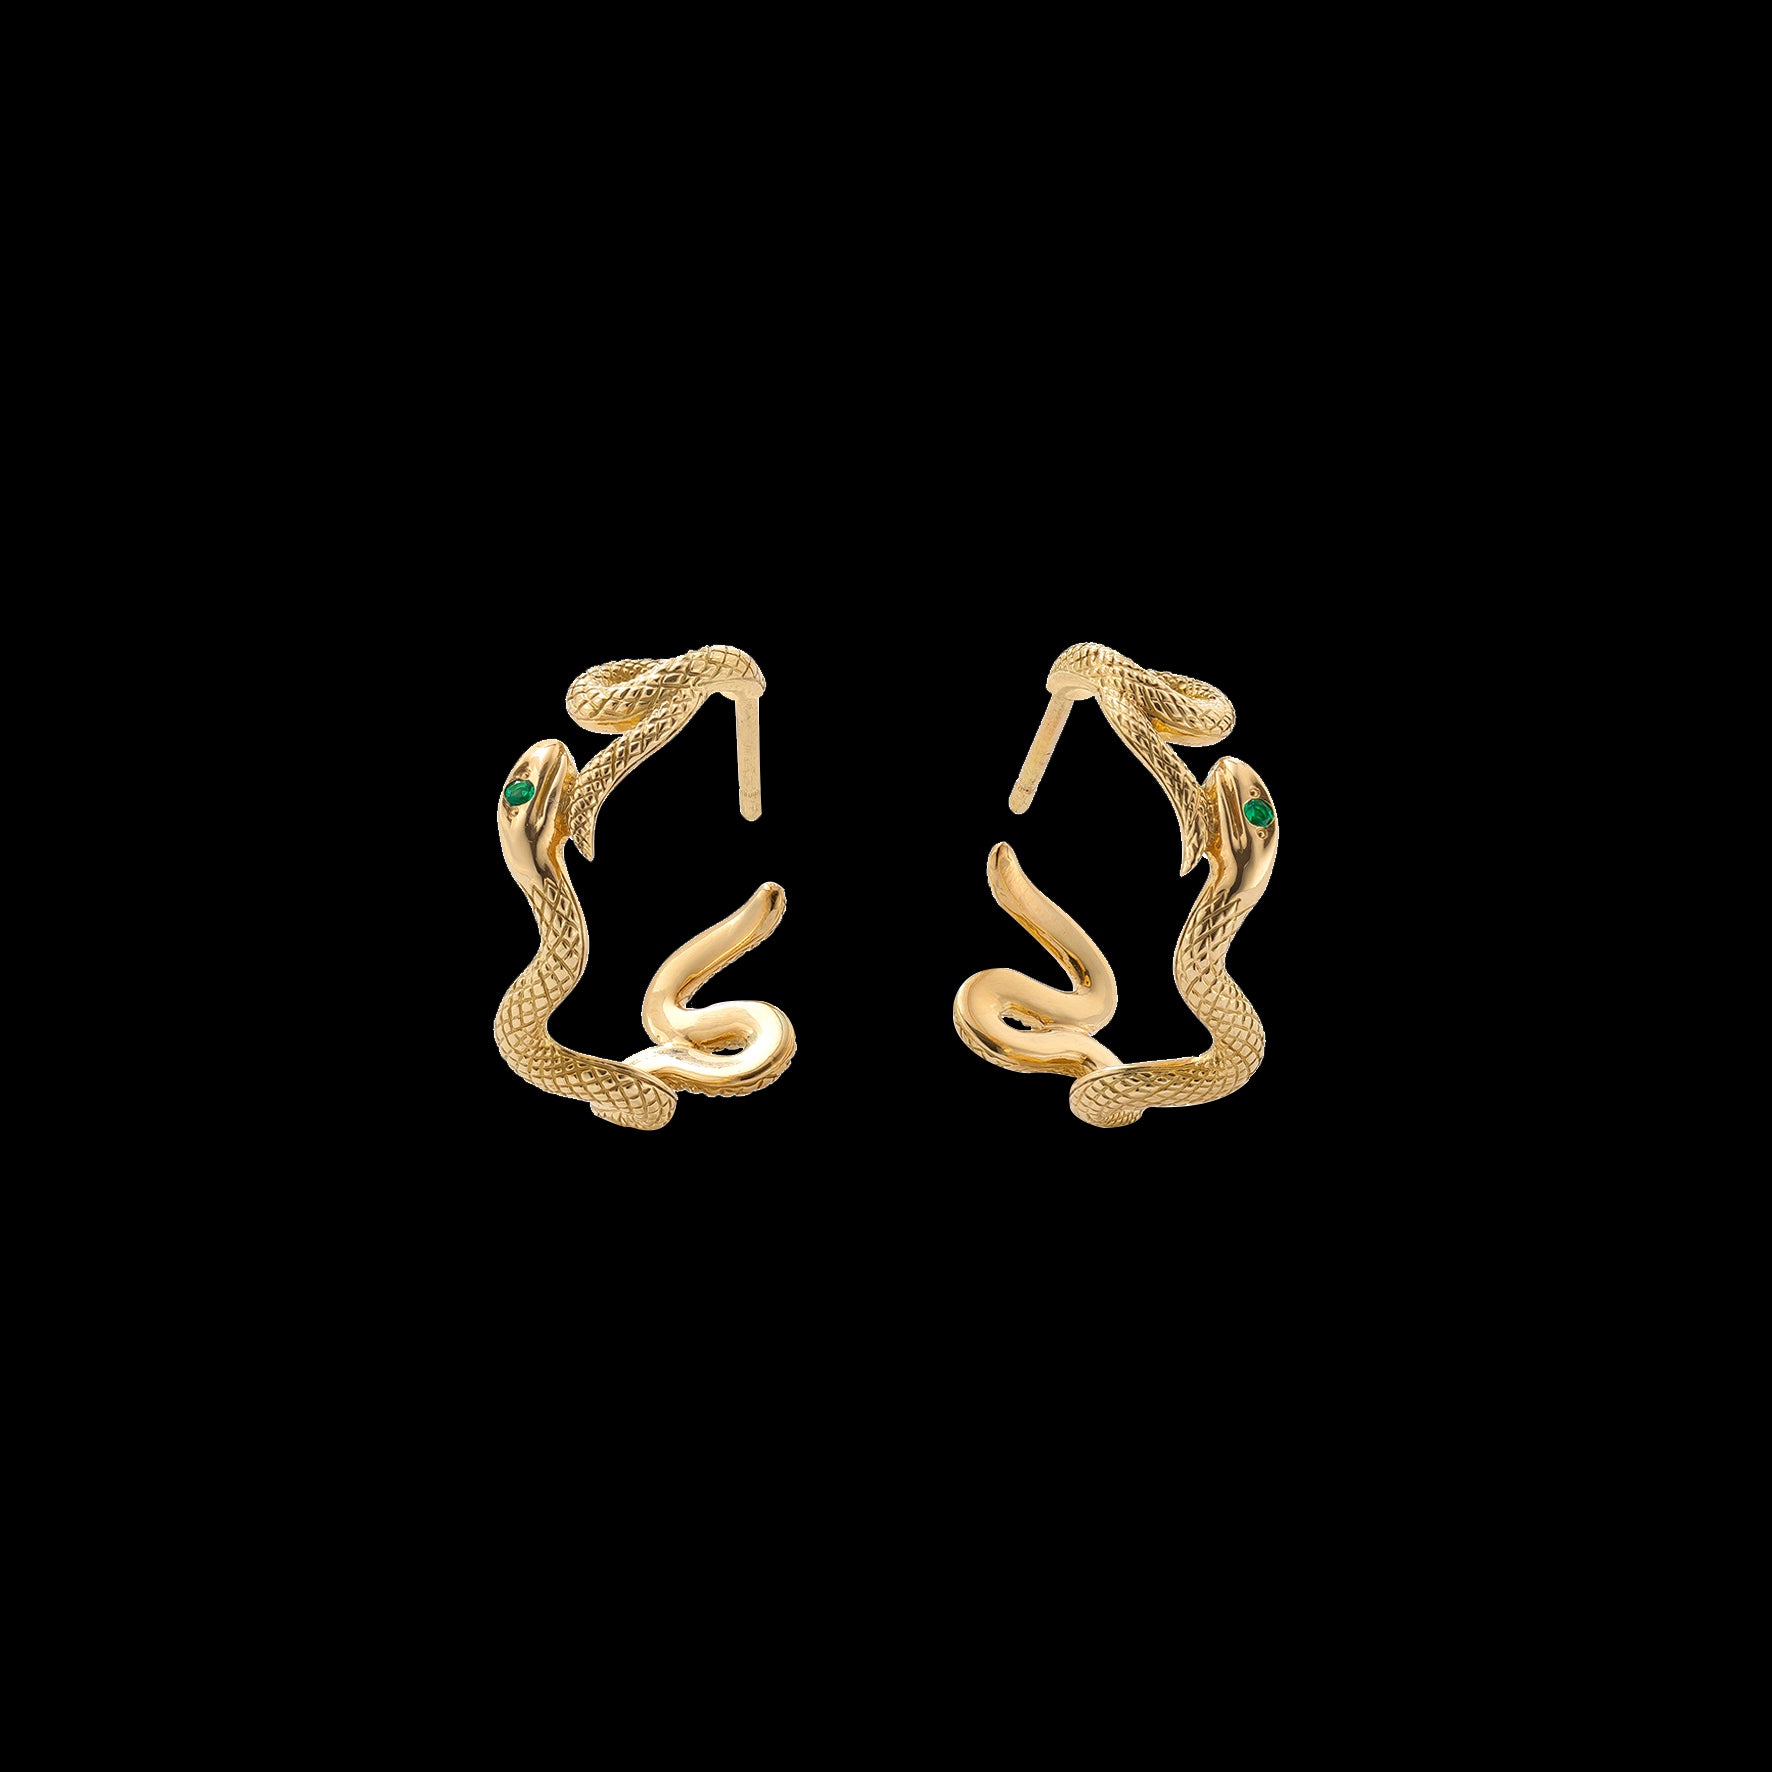 Gatekeeper snake gold and emerald hoop earrings Solange Azagury-Partridge front view